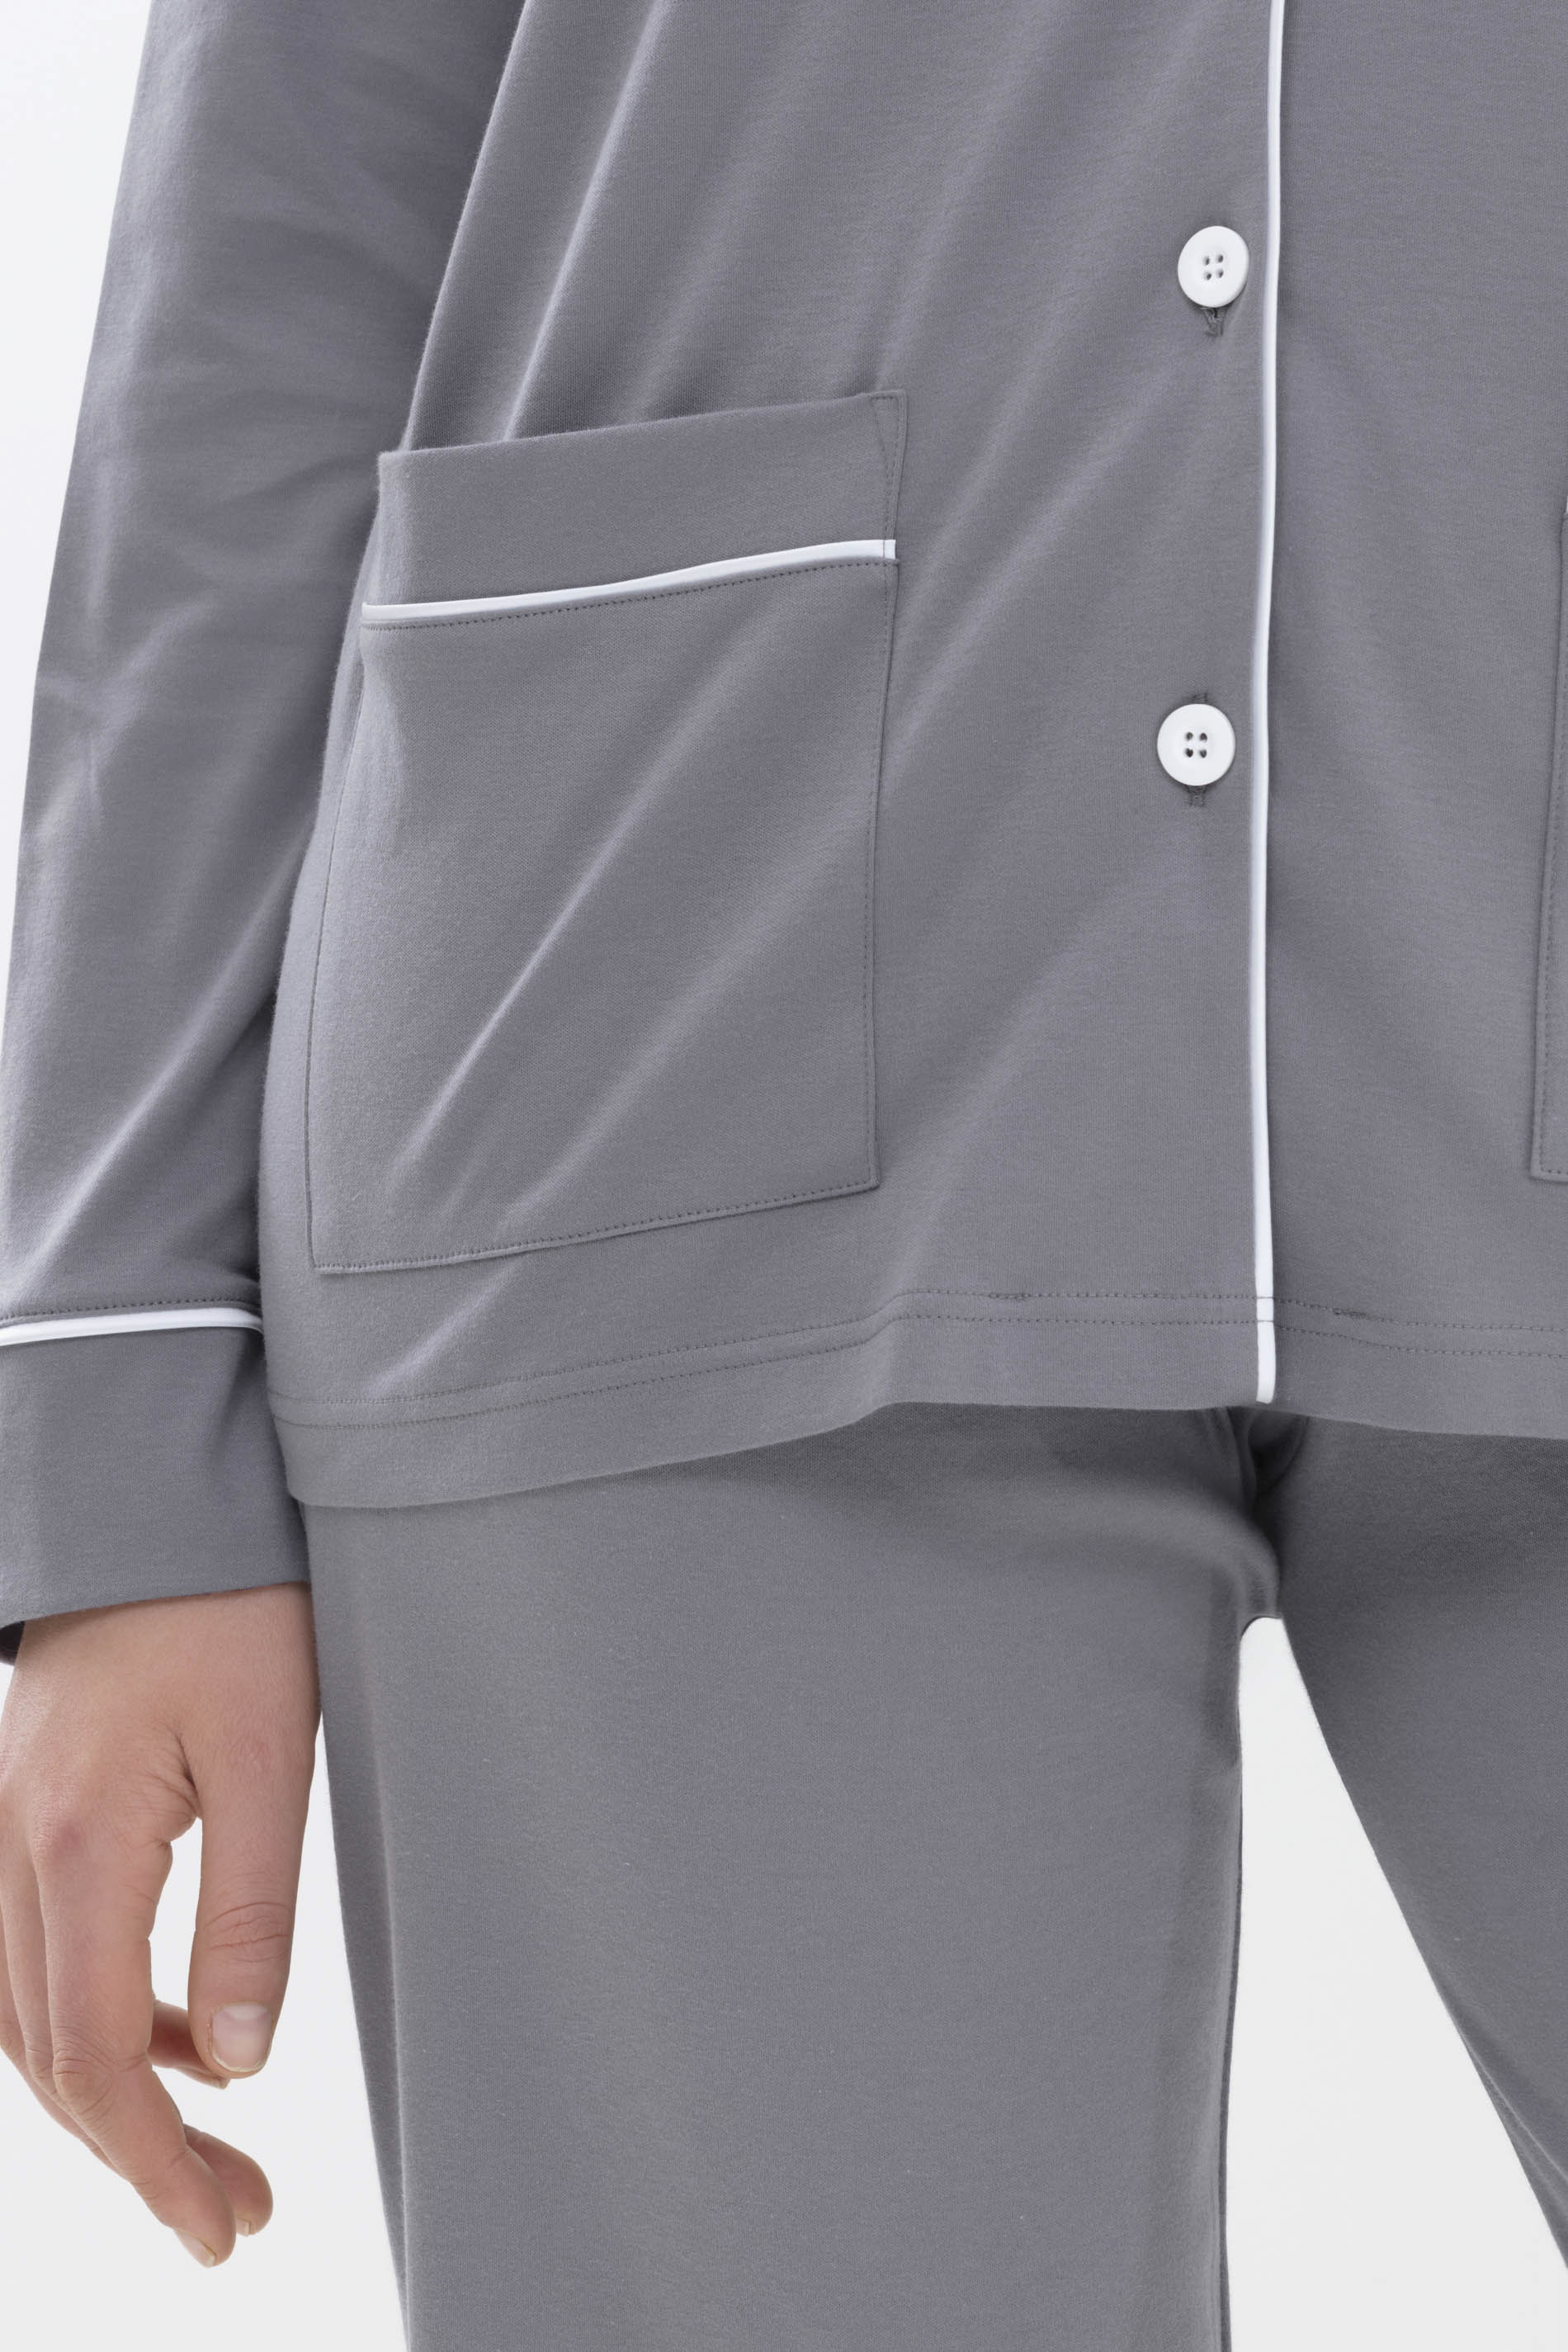 Pyjama shirt Lovely Grey Serie Sleepsation Detail View 02 | mey®